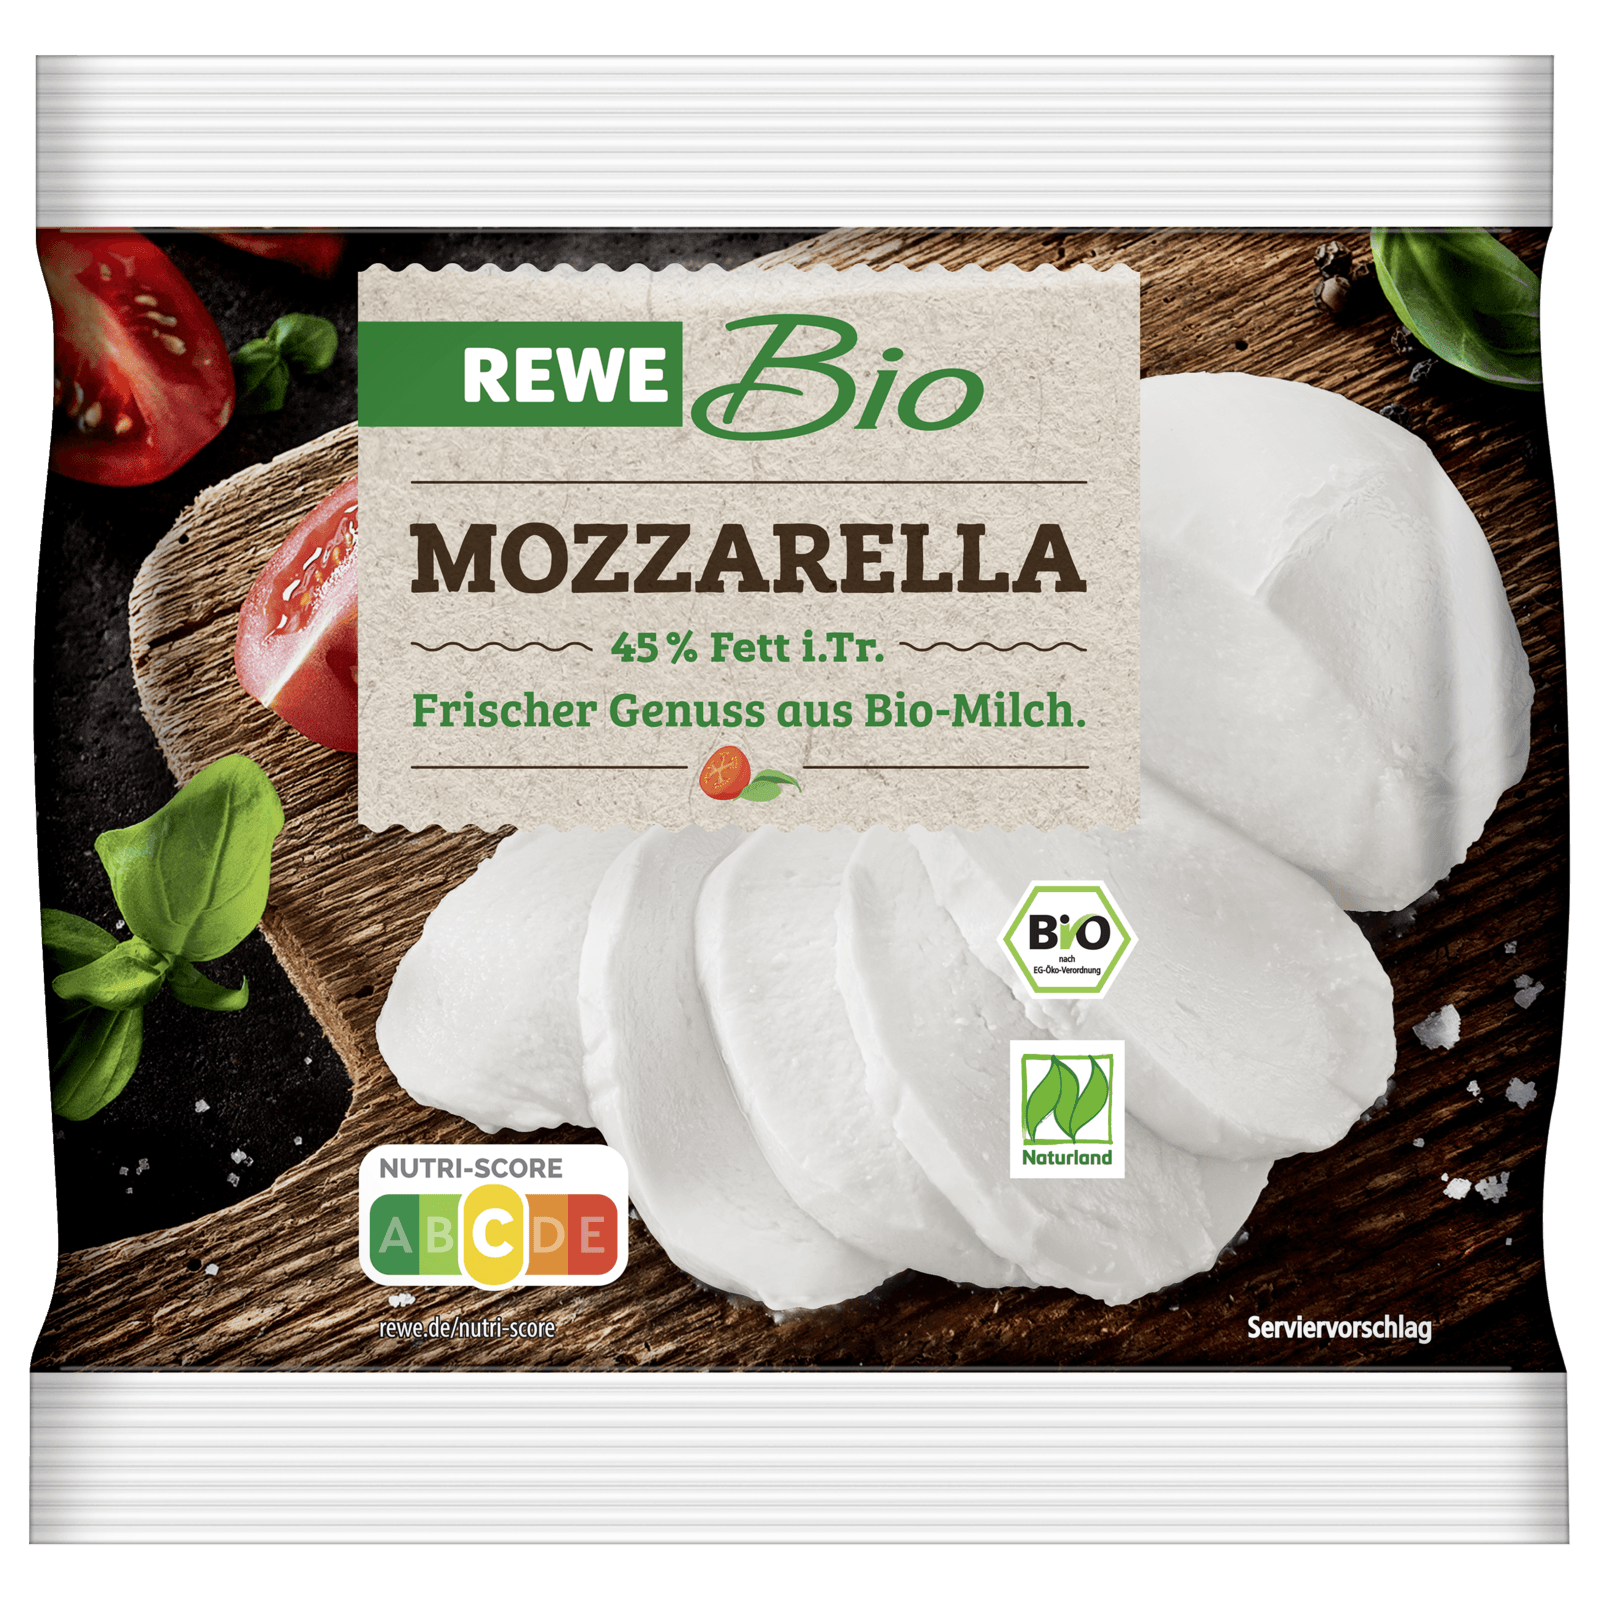 REWE Bio Mozzarella 125g